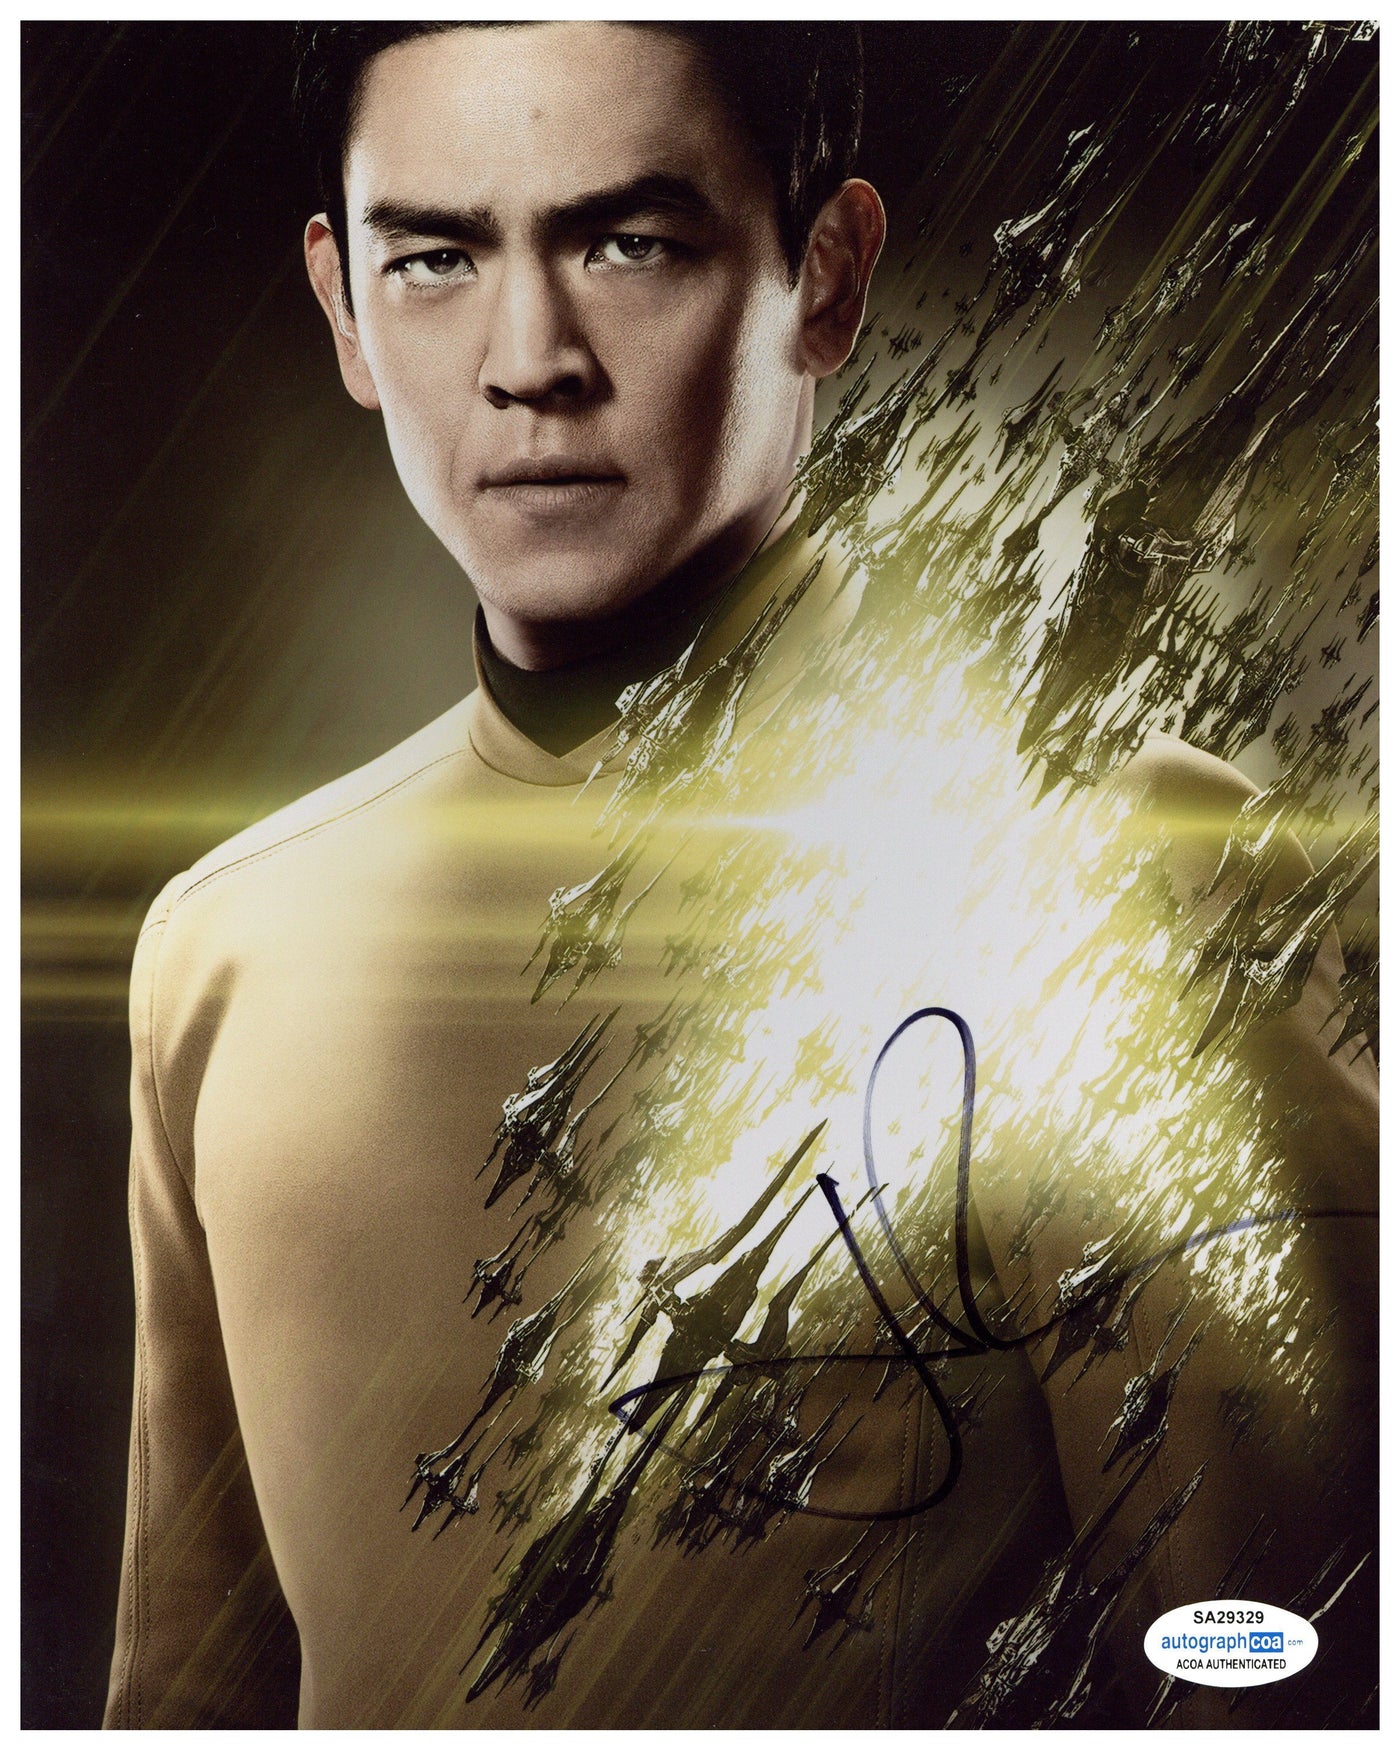 John Cho Signed 8x10 Photo Star Trek Authentic Autographs AutographCOA